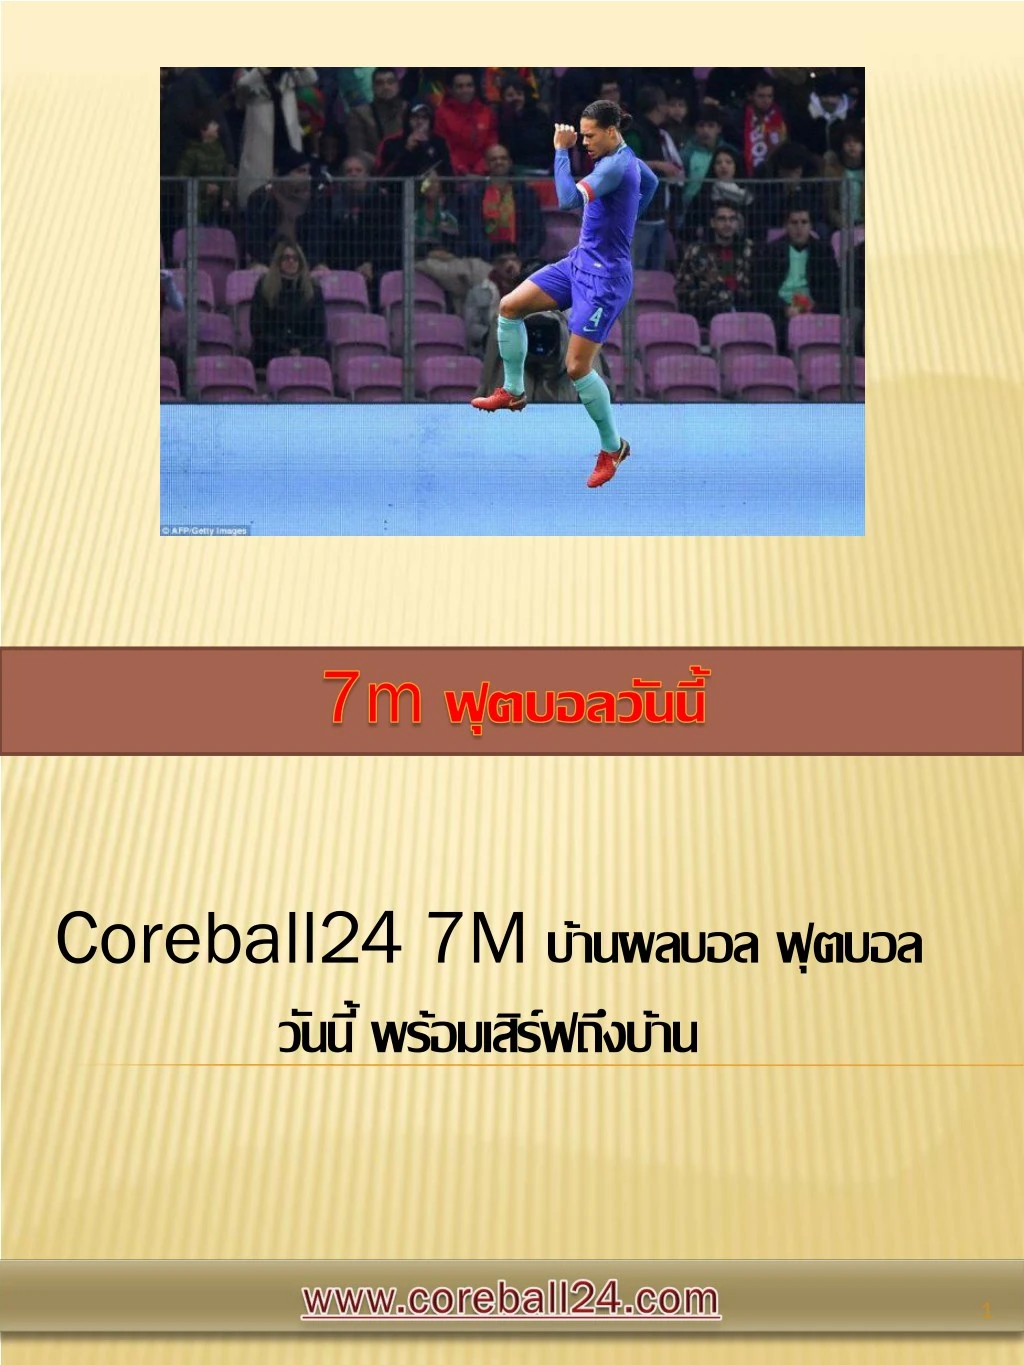 coreball24 7m